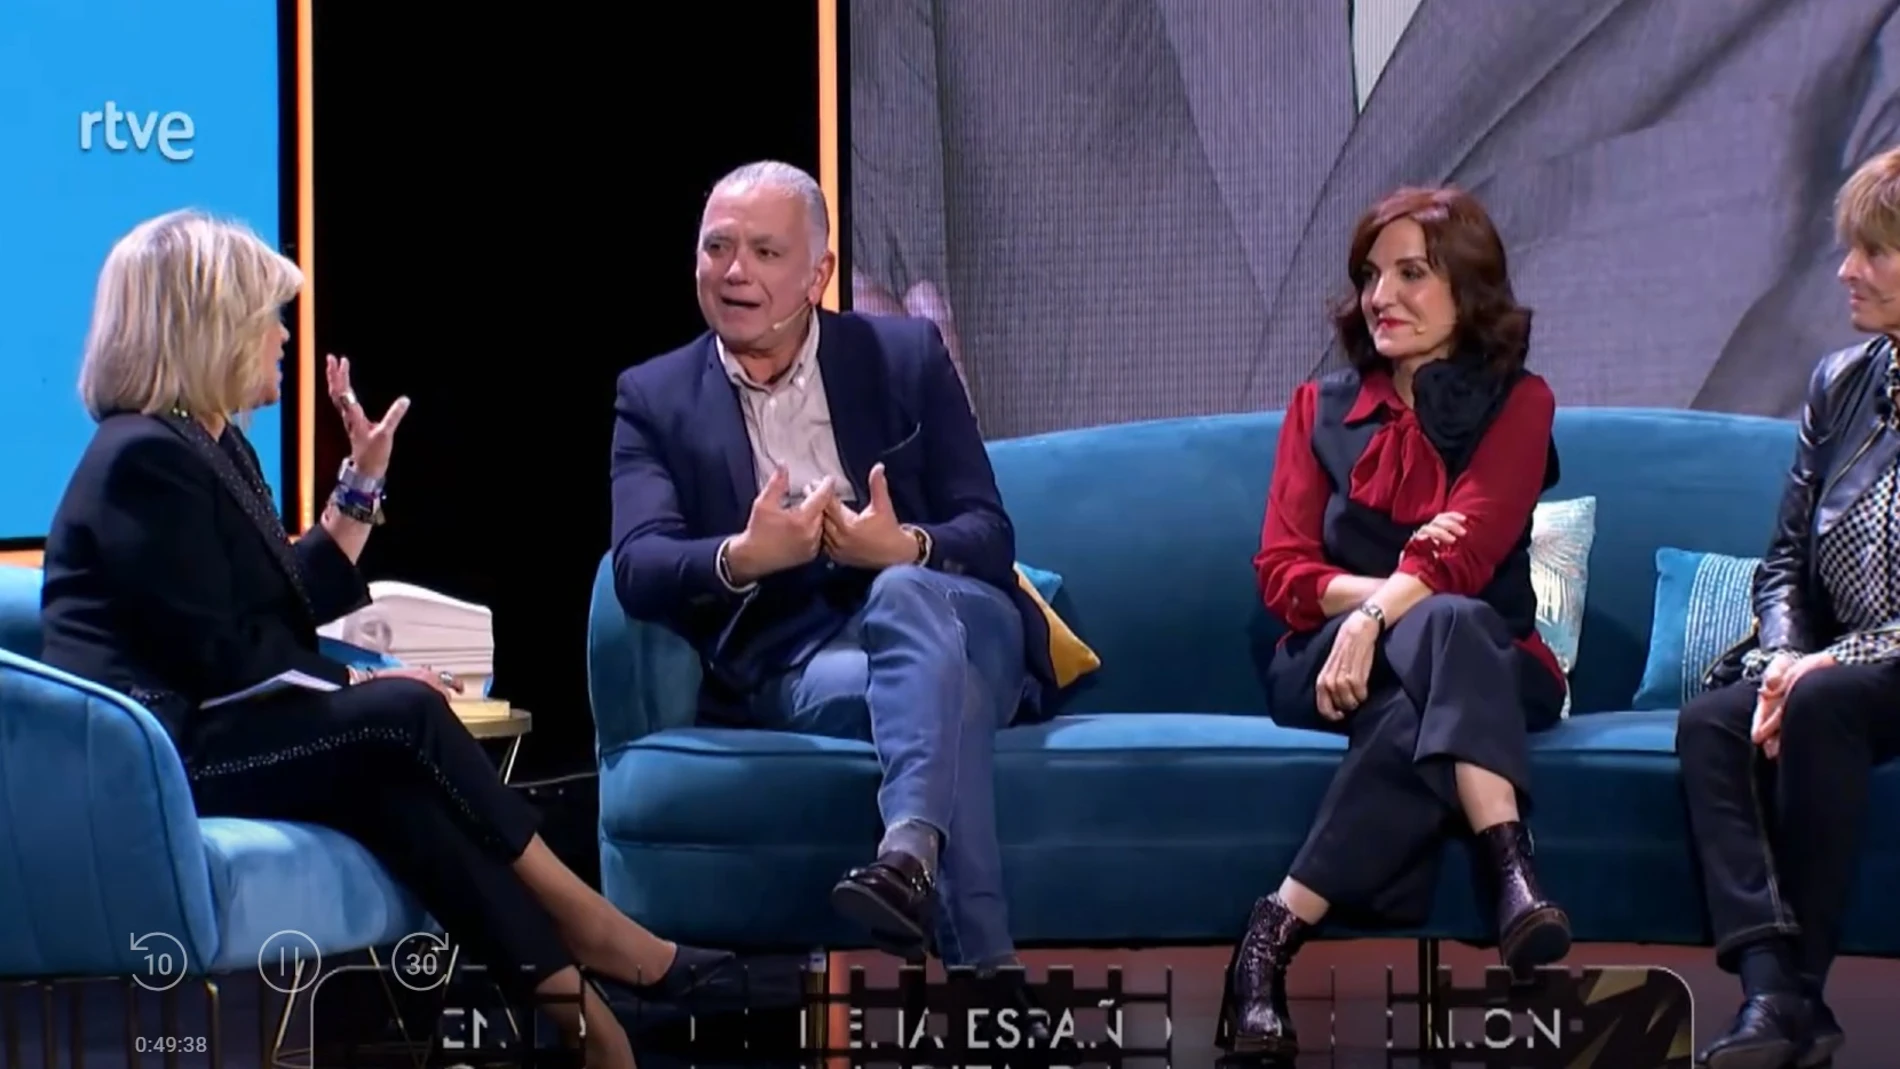 De izquierda a derecha, Terelu Campos, Juan Ramón Lucas, Elvira Lindo y Mercedes Milá